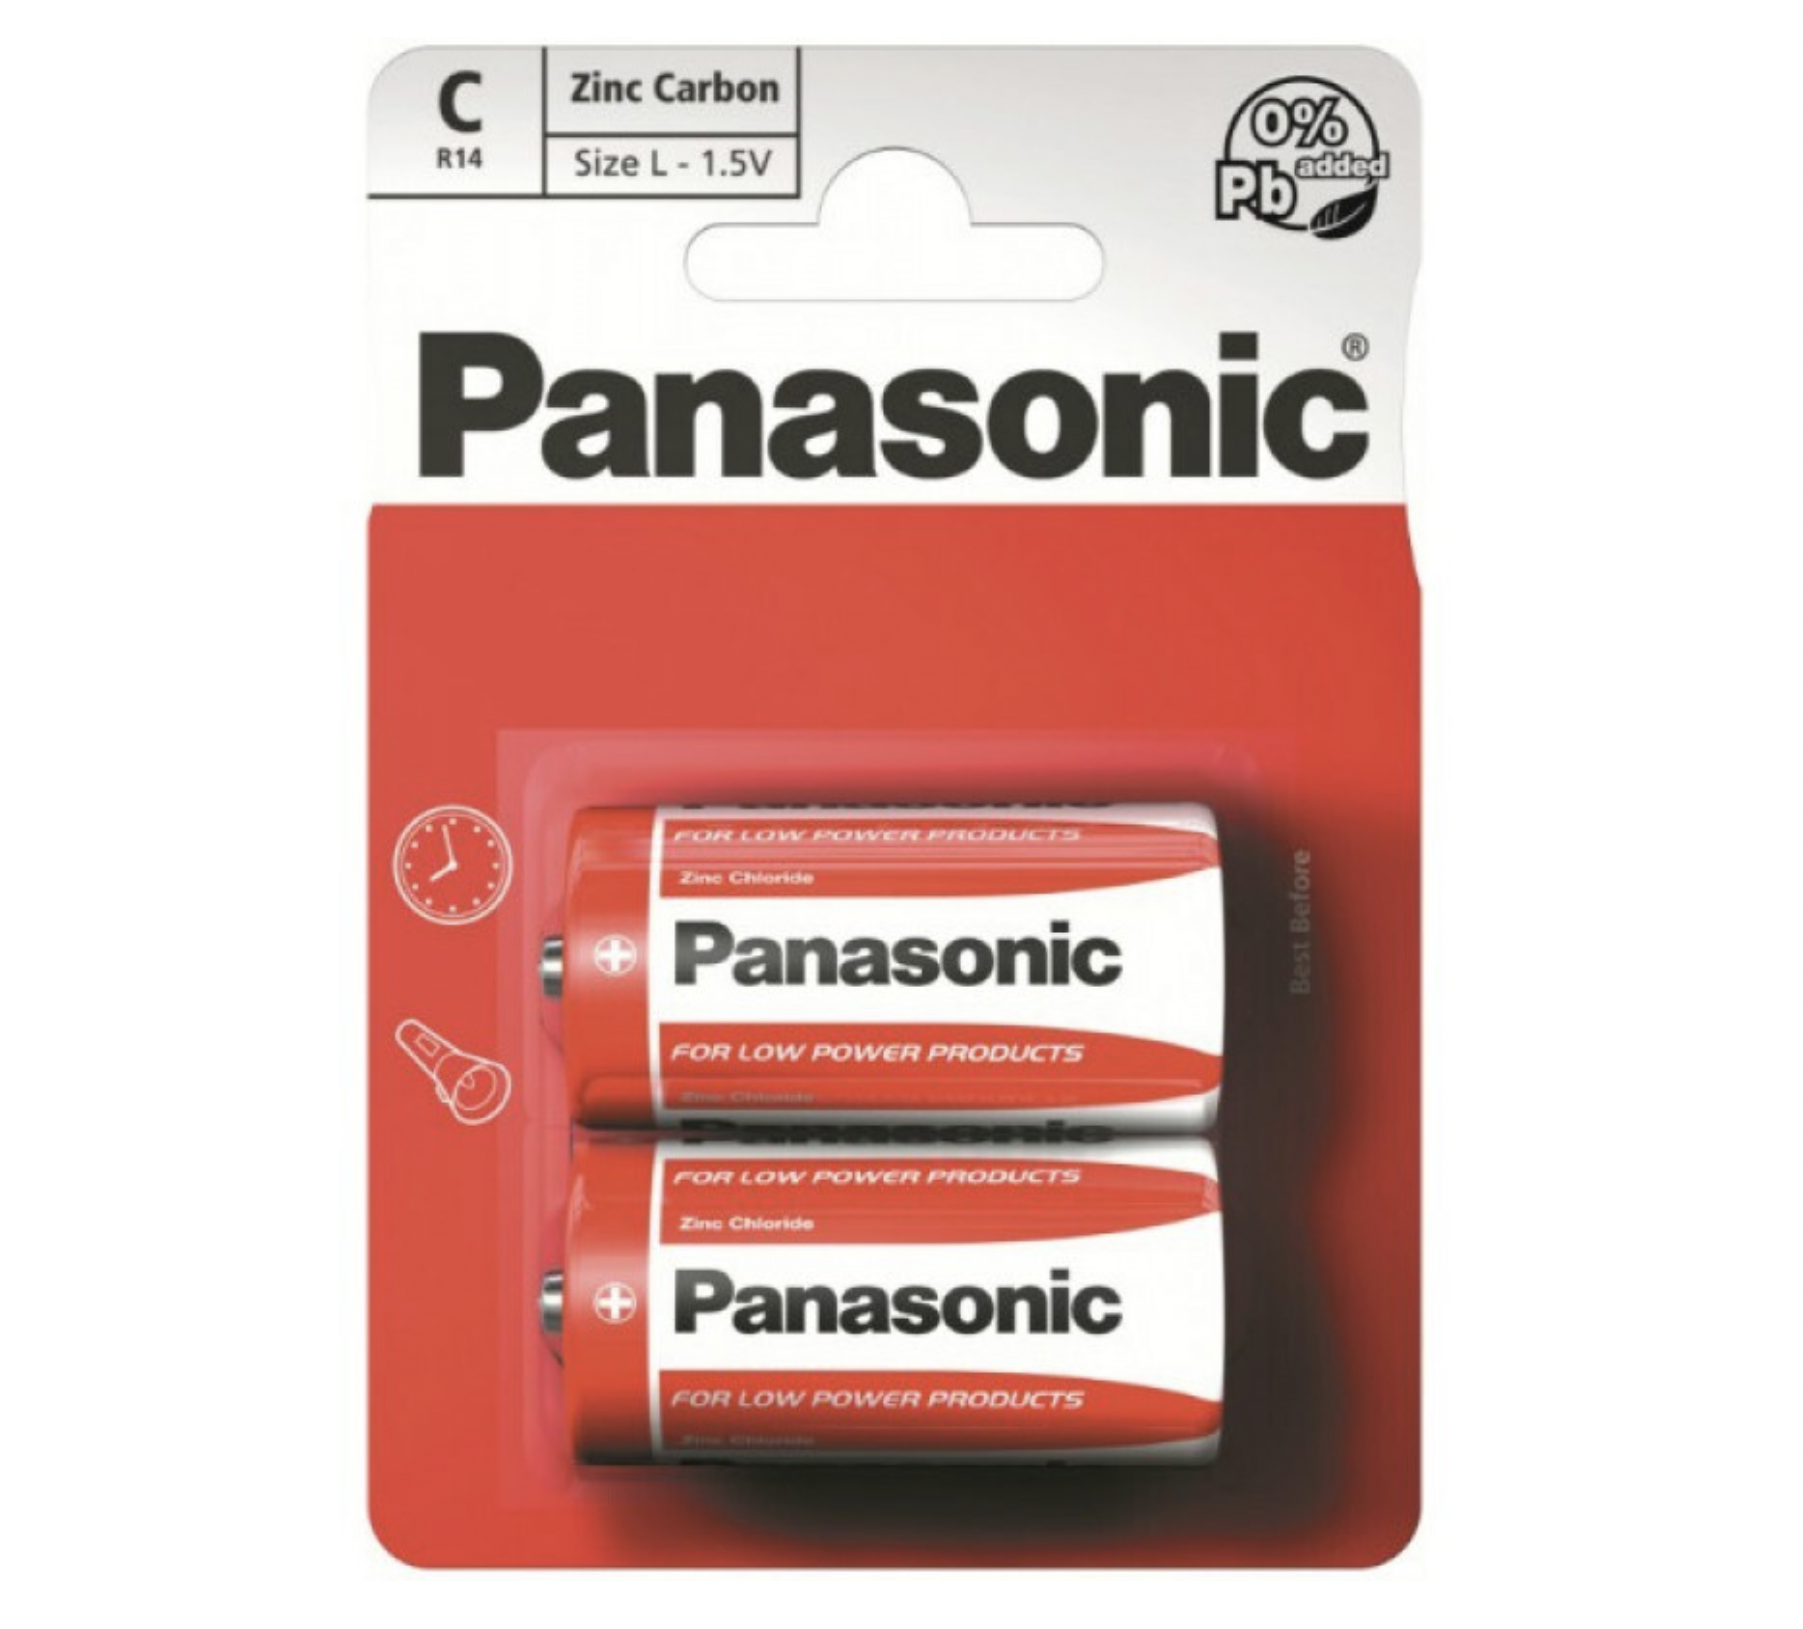   / Panasonic -   Zinc Carbon C R14 1,5V 2 